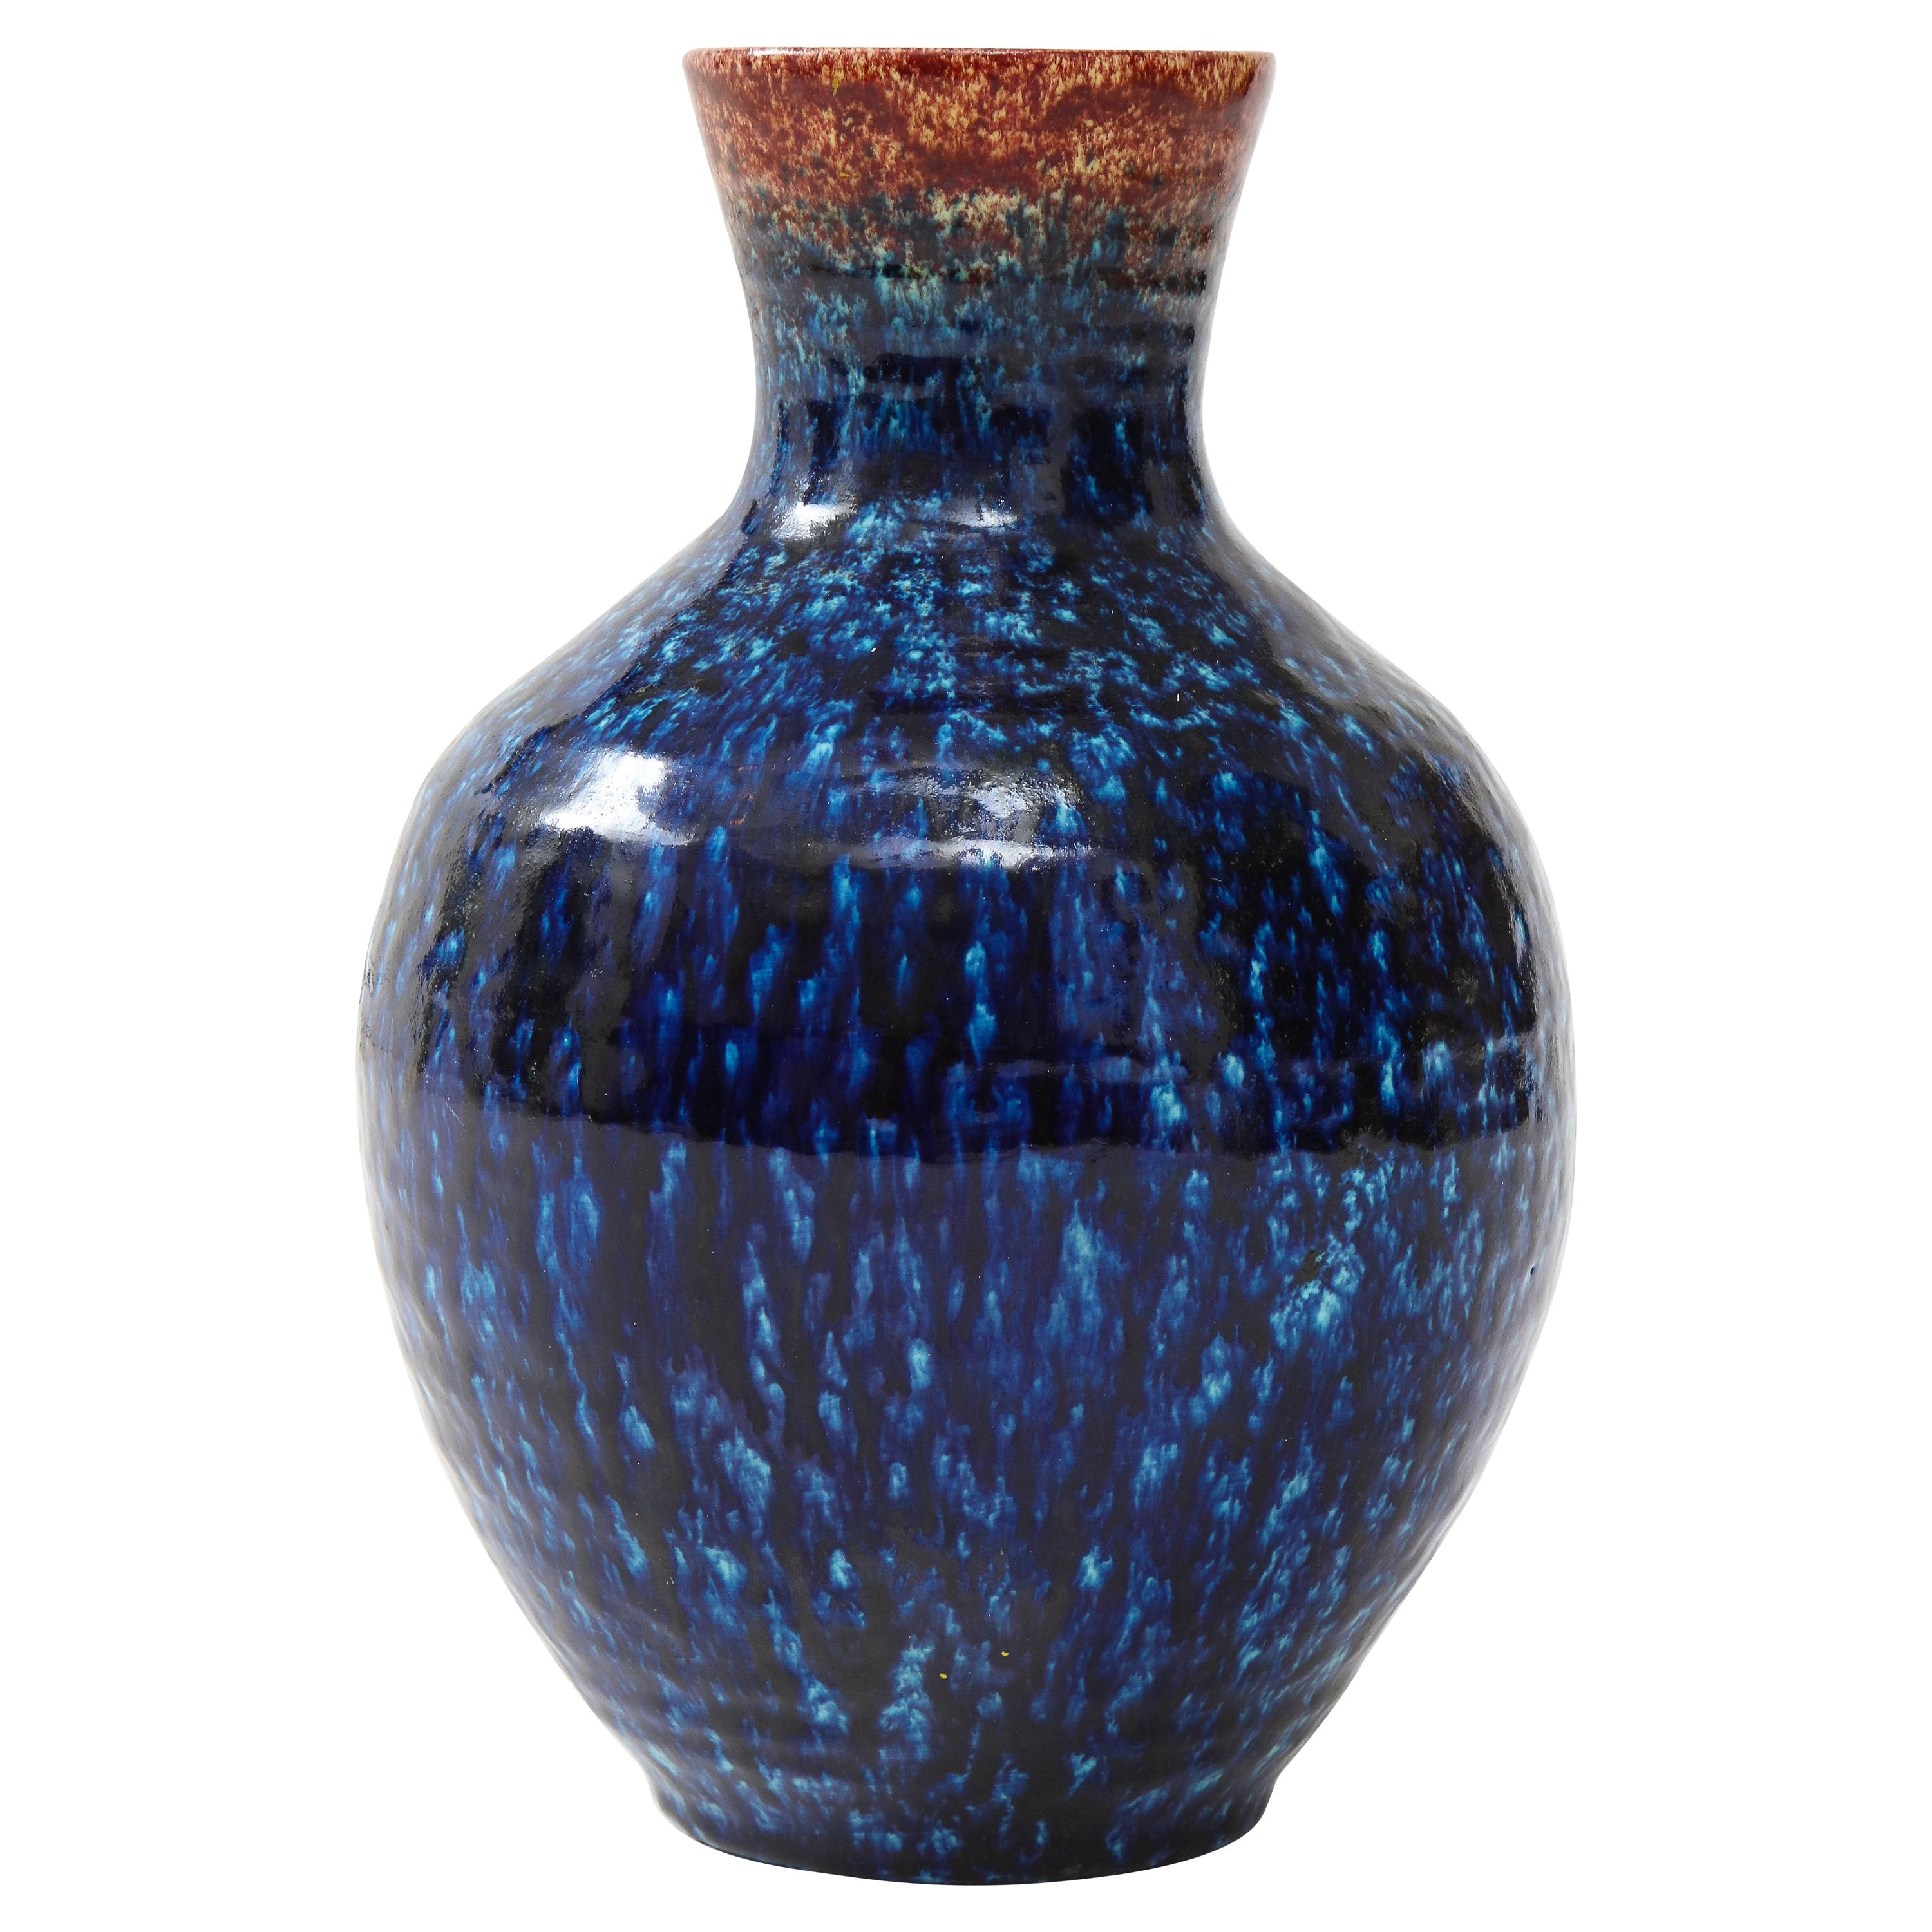 Ceramic Vase from Accolay Pottery